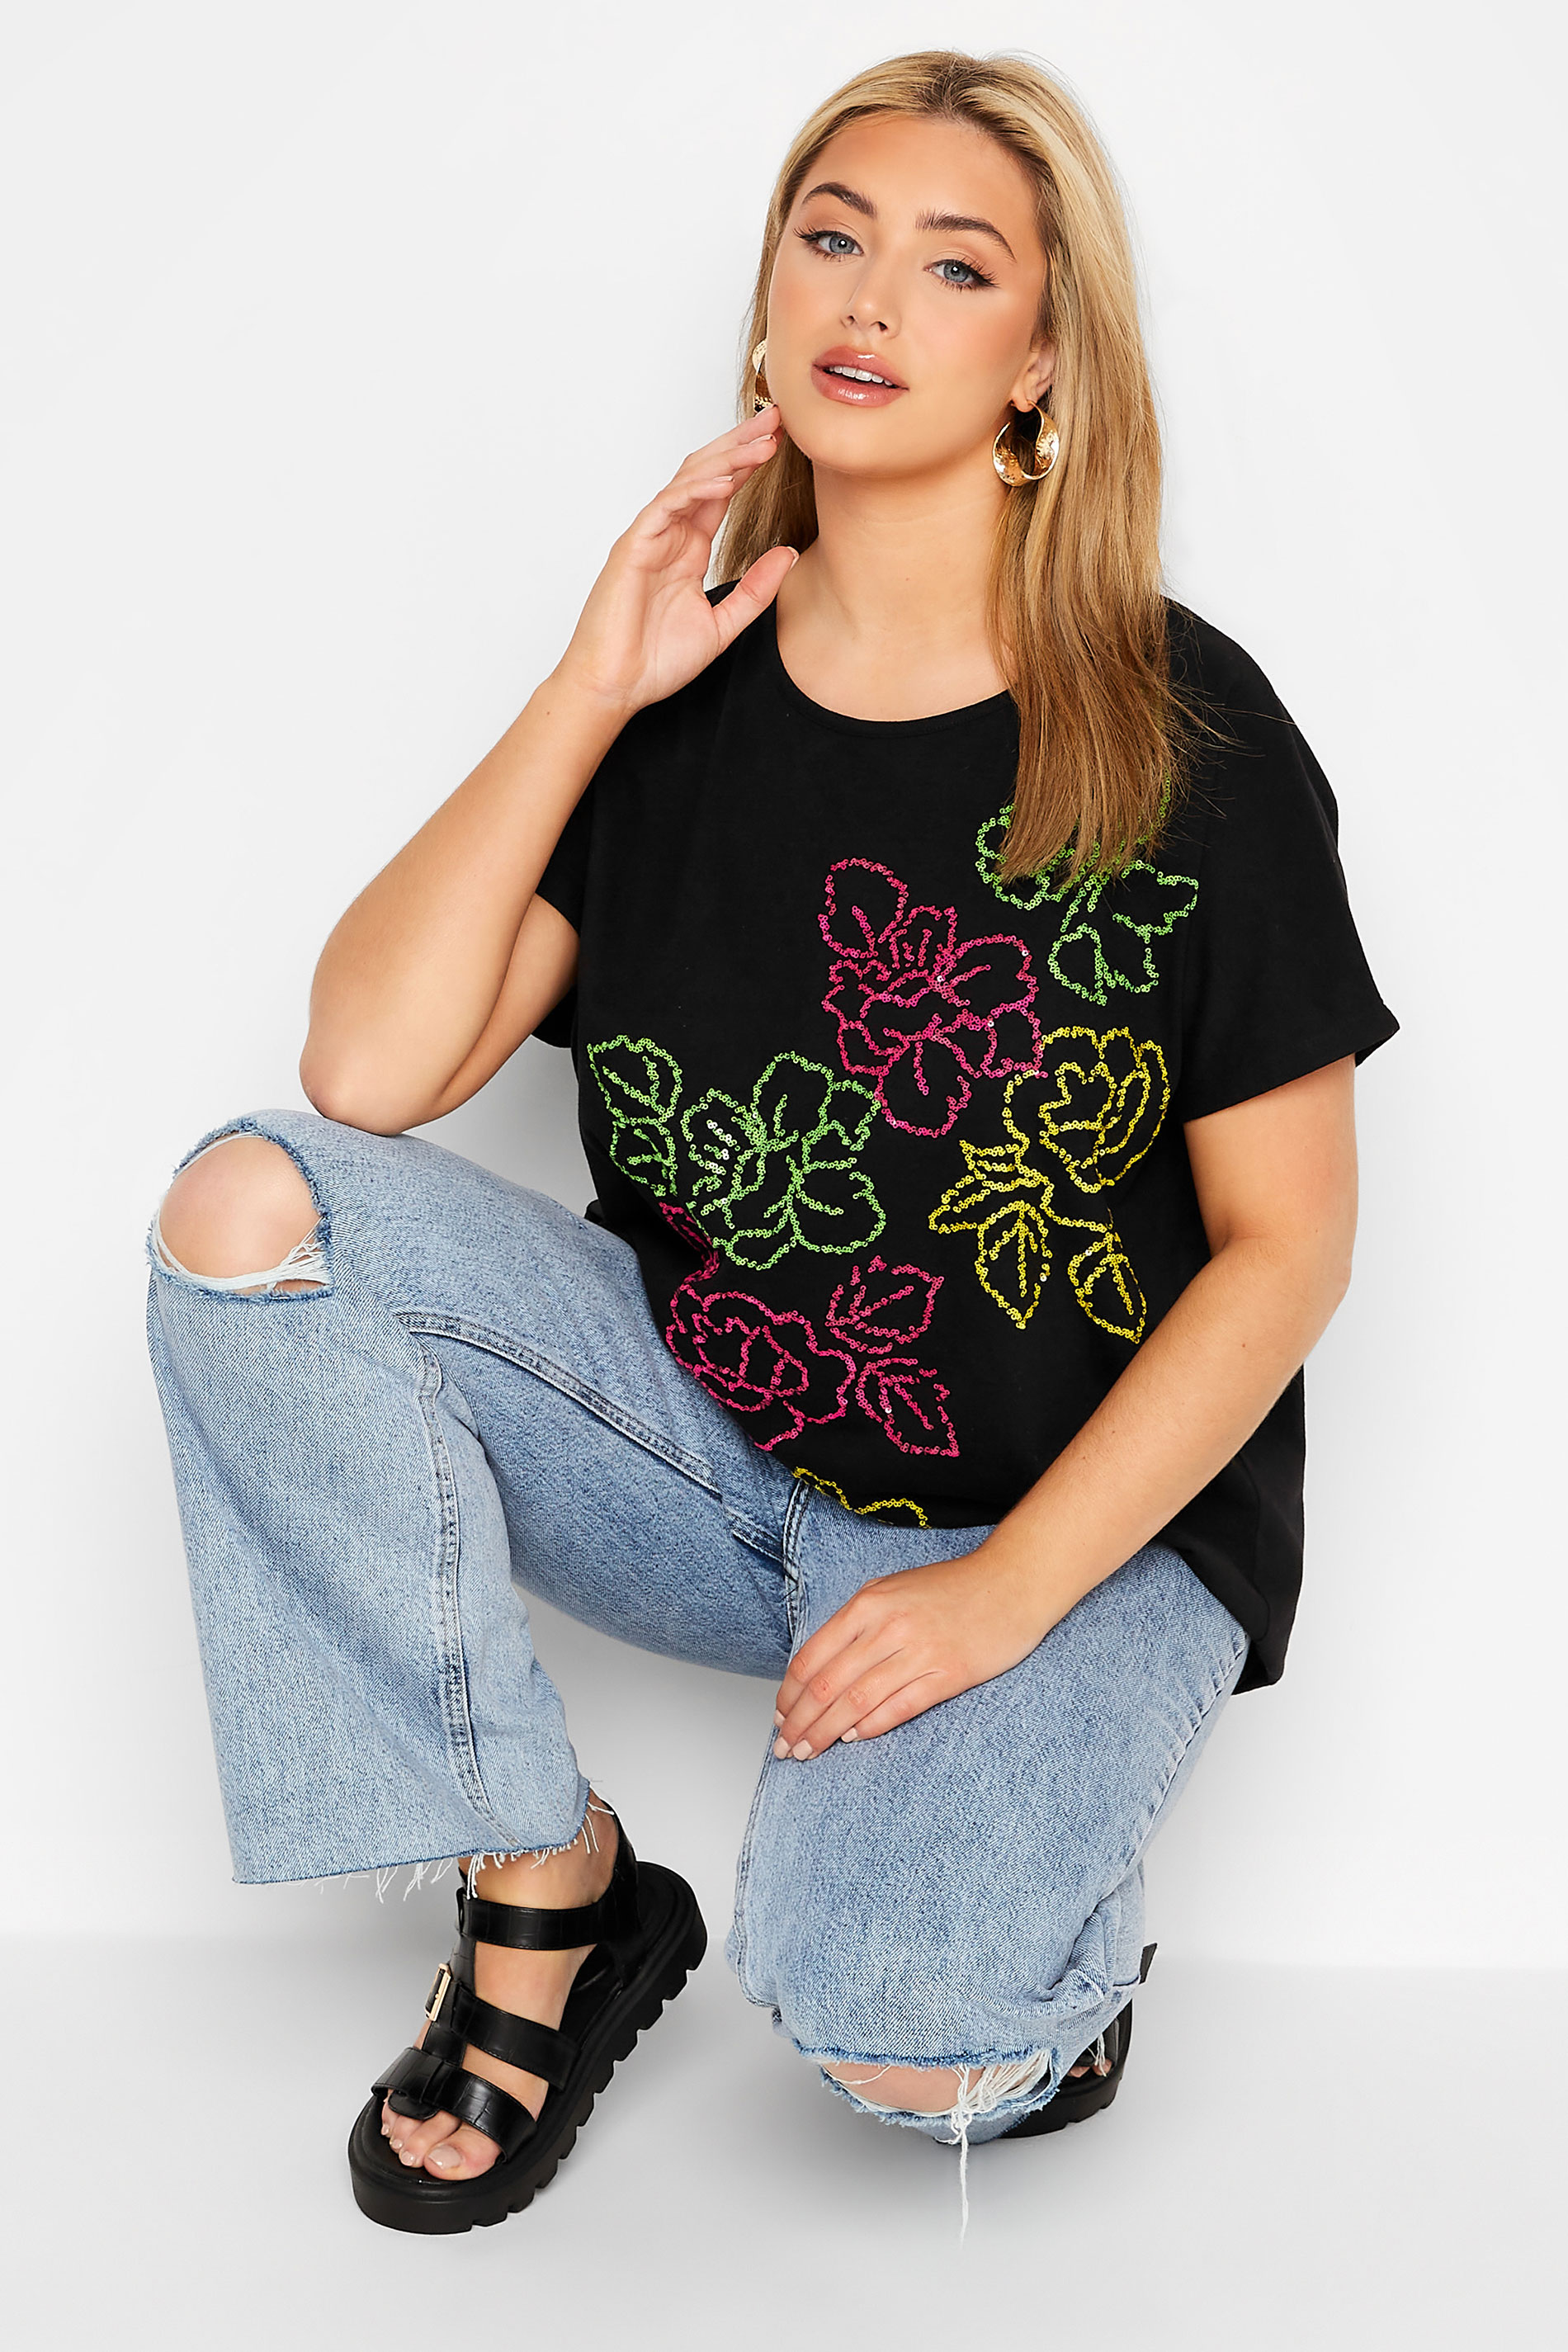 Grande taille  Tops Grande taille  T-Shirts | T-Shirt Noir Design Floral en Sequins - GV18288